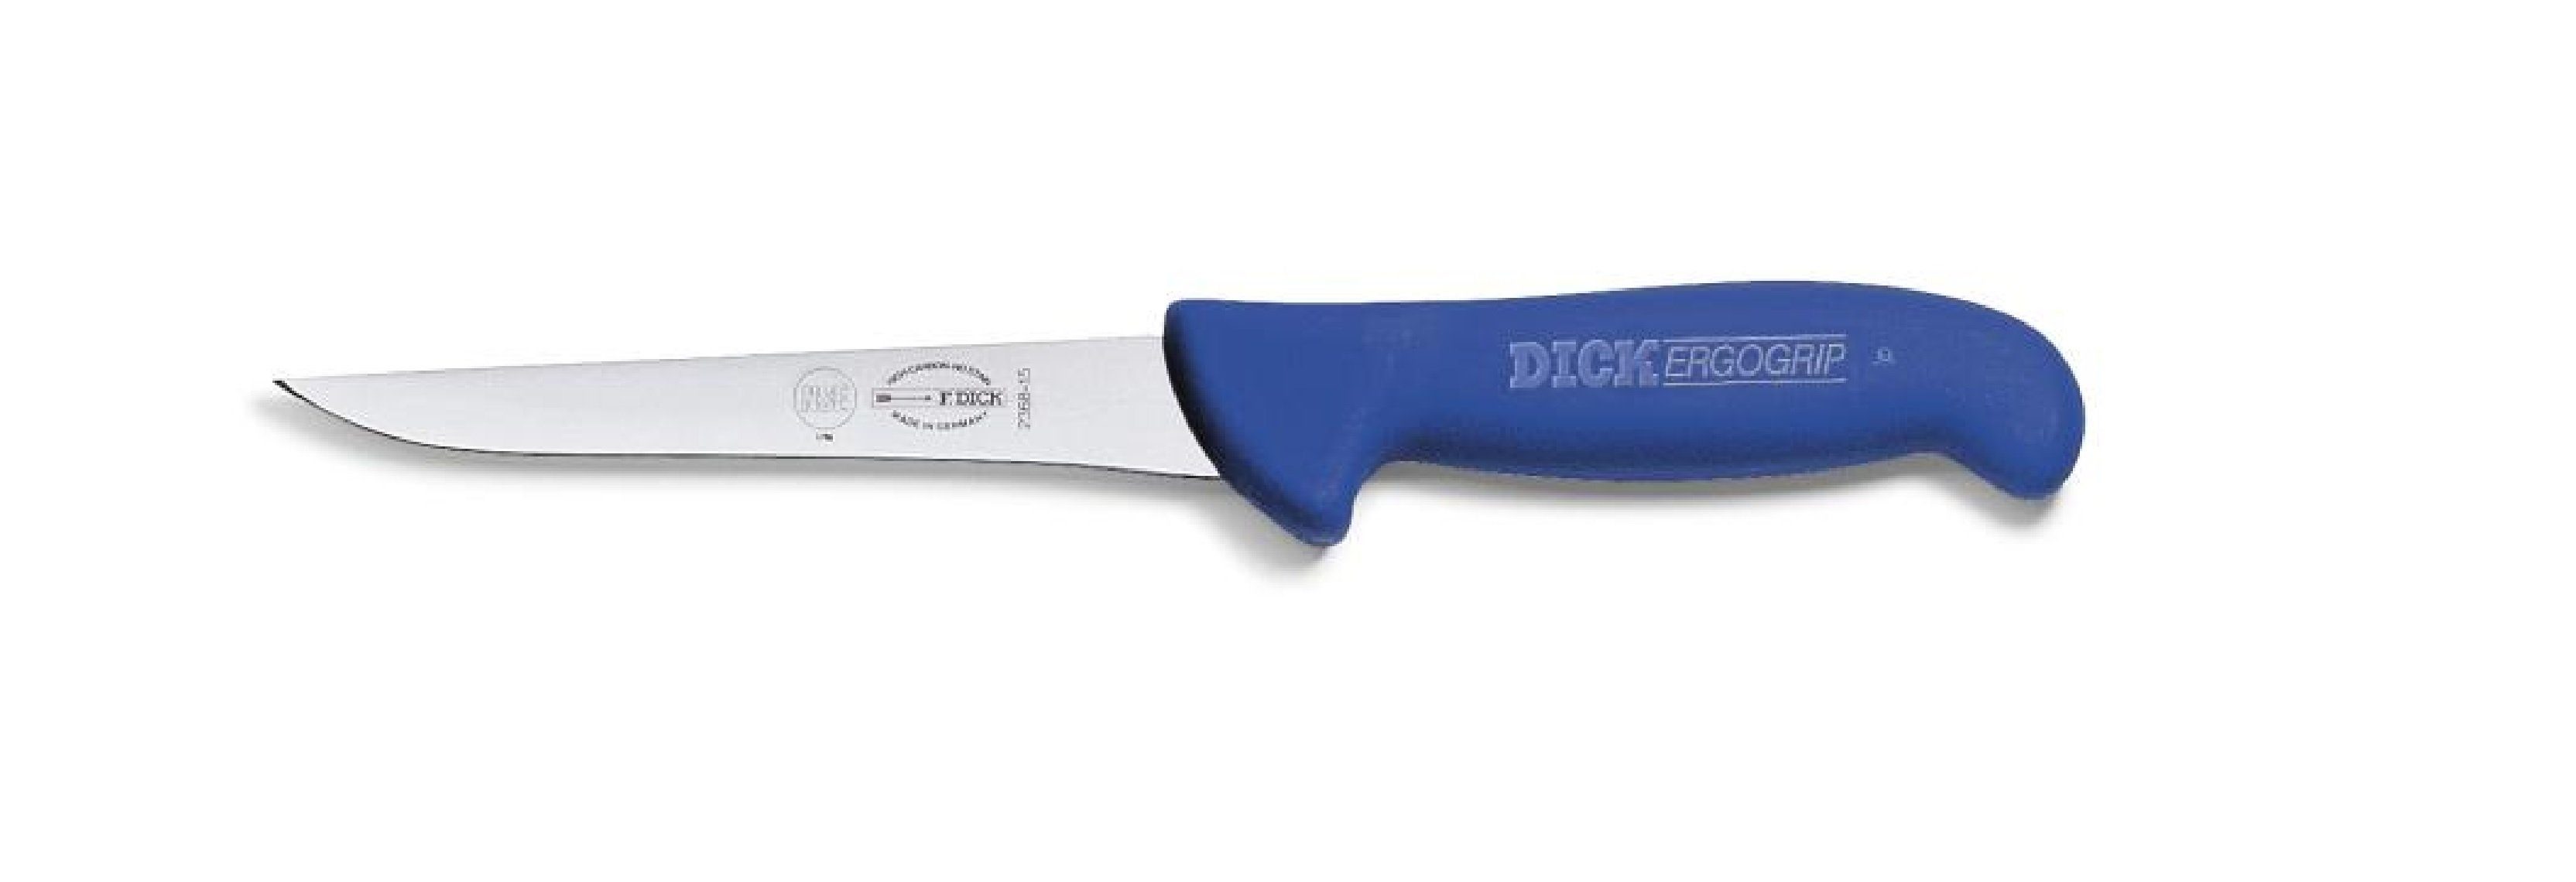 F. DICK Ausbeinmesser Dick Ausbeinmesser Ergogrip Messer schmale 15 cm Klinge 8236815